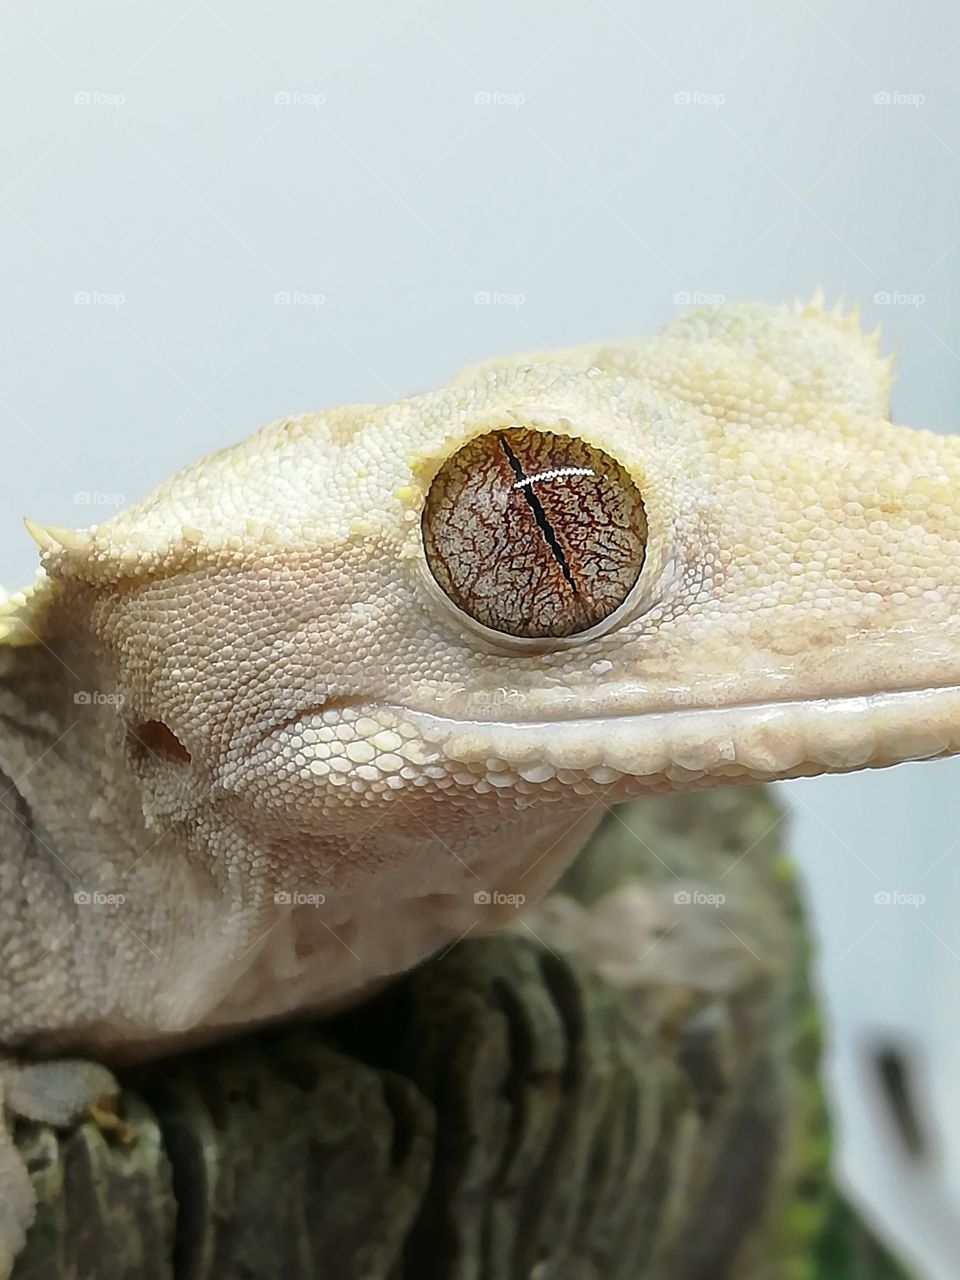 Closeup of a crested gecko eye